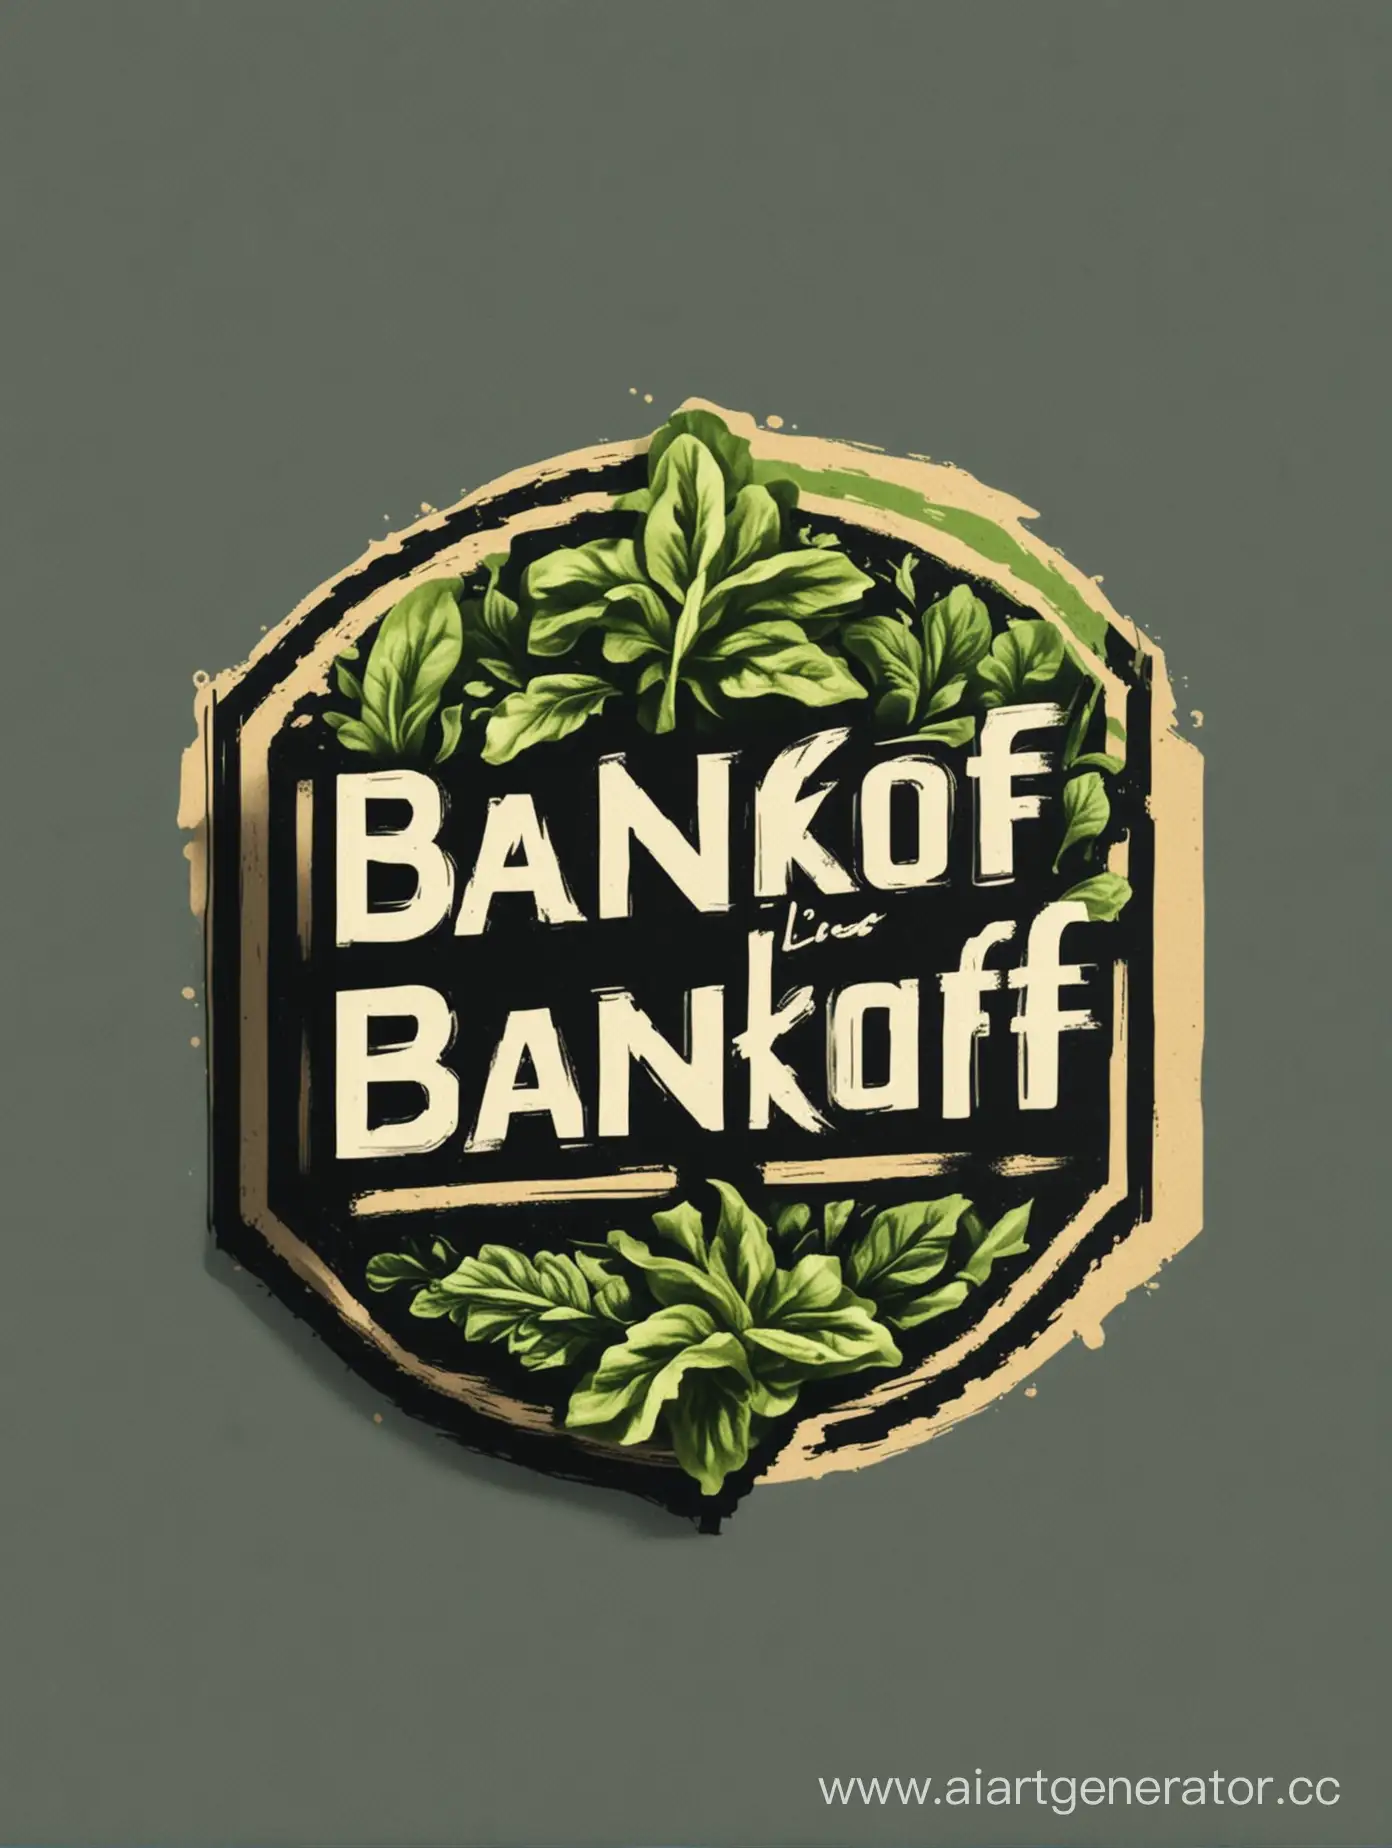 Bankoff-Logo-Design-with-Salad-Green-and-Black-Color-Scheme